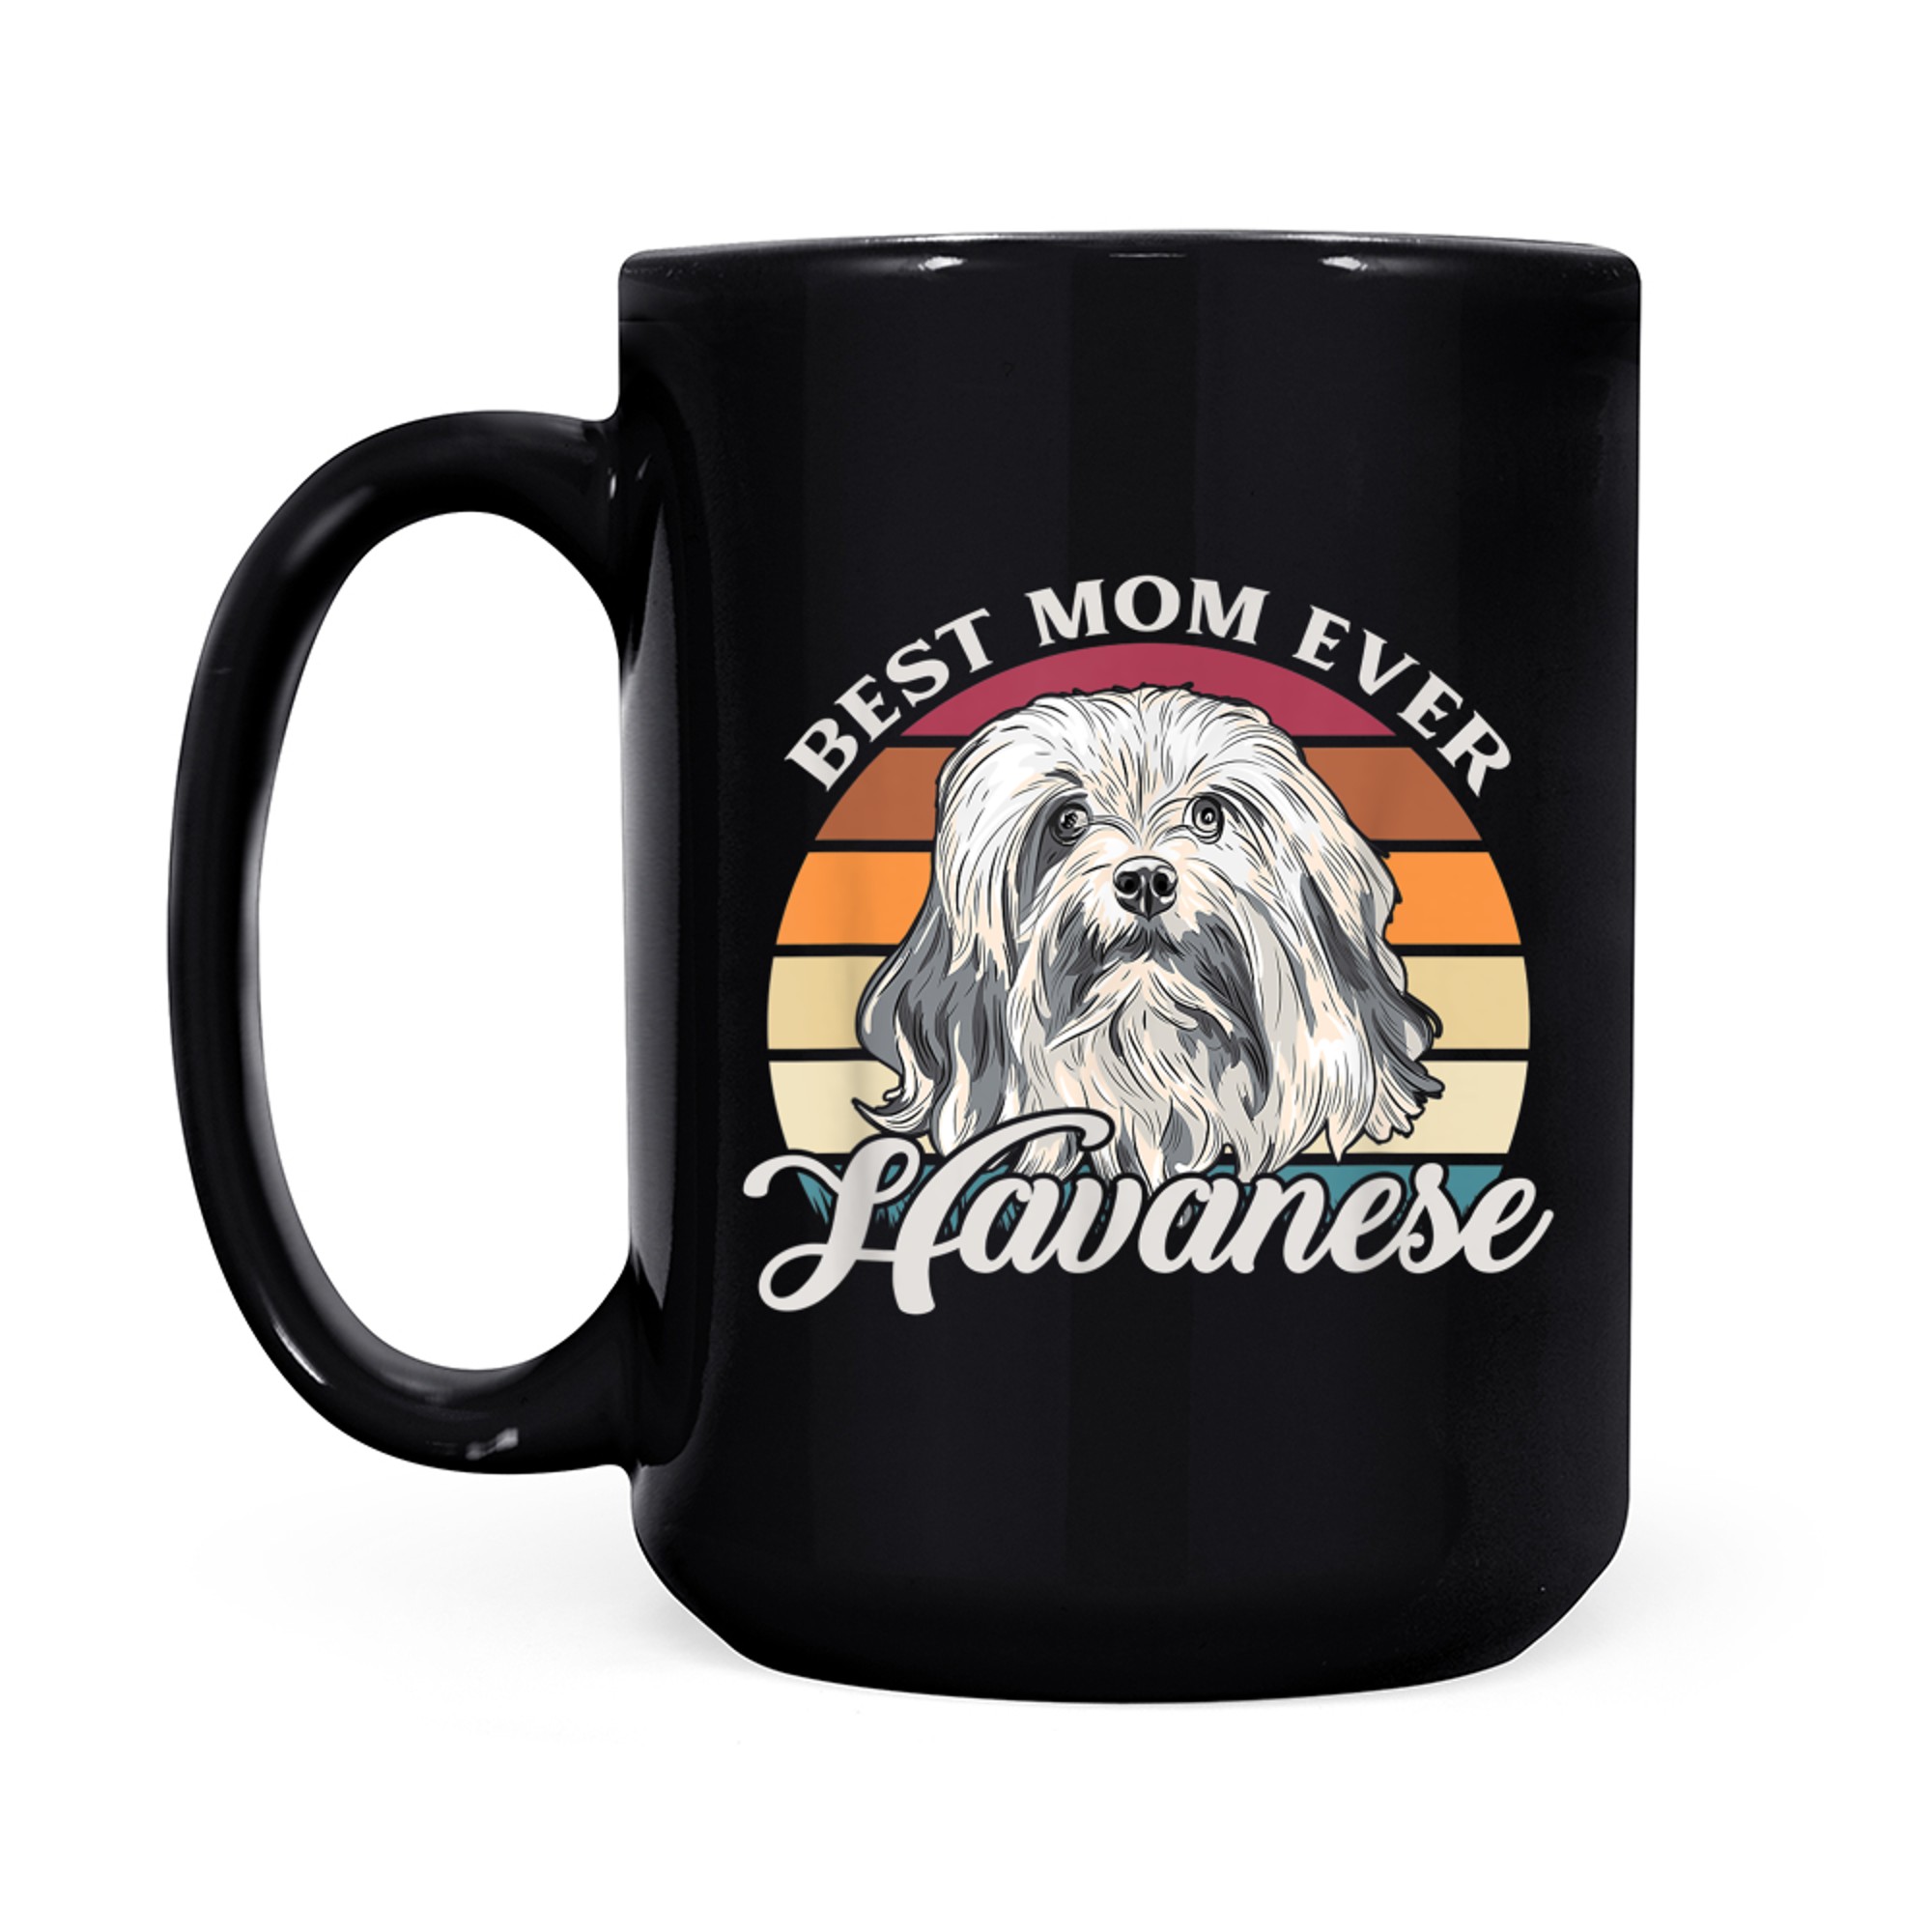 Best Mom Ever Havanese Dog Owner Gift mug black